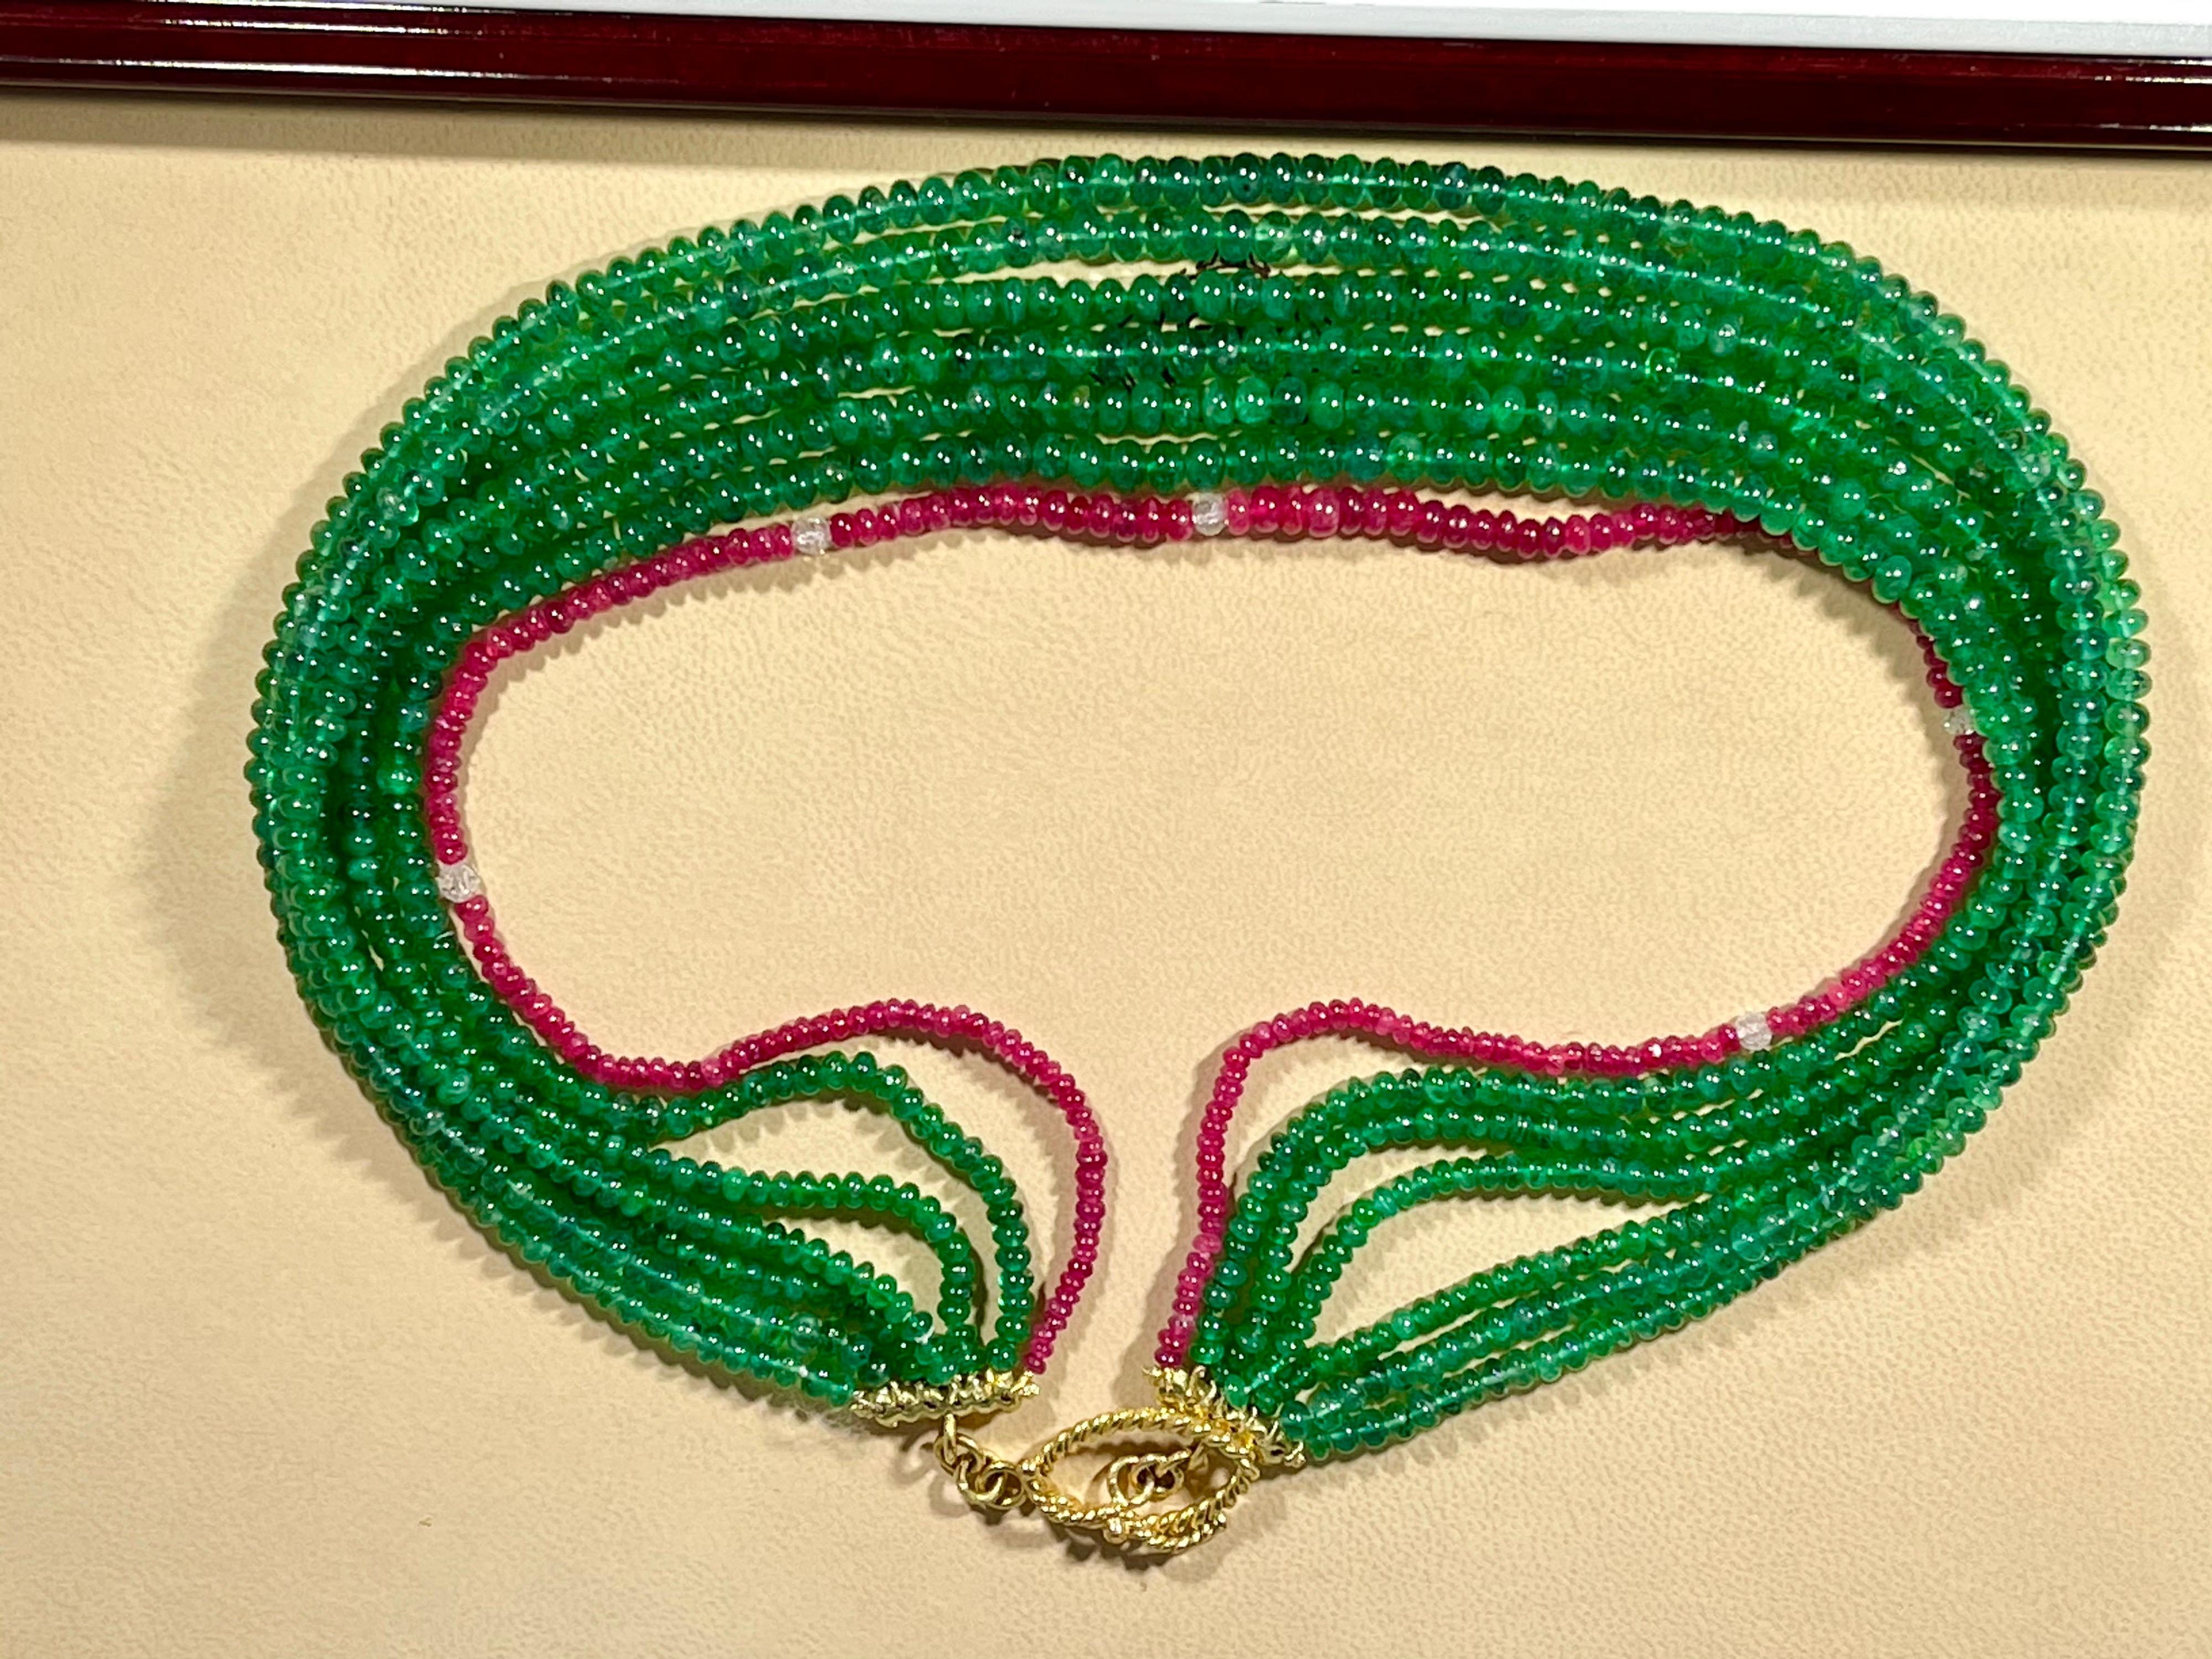 360 Carat Emerald, Burma Ruby and Diamond Beads Necklace 18 Karat Yellow Gold For Sale 9